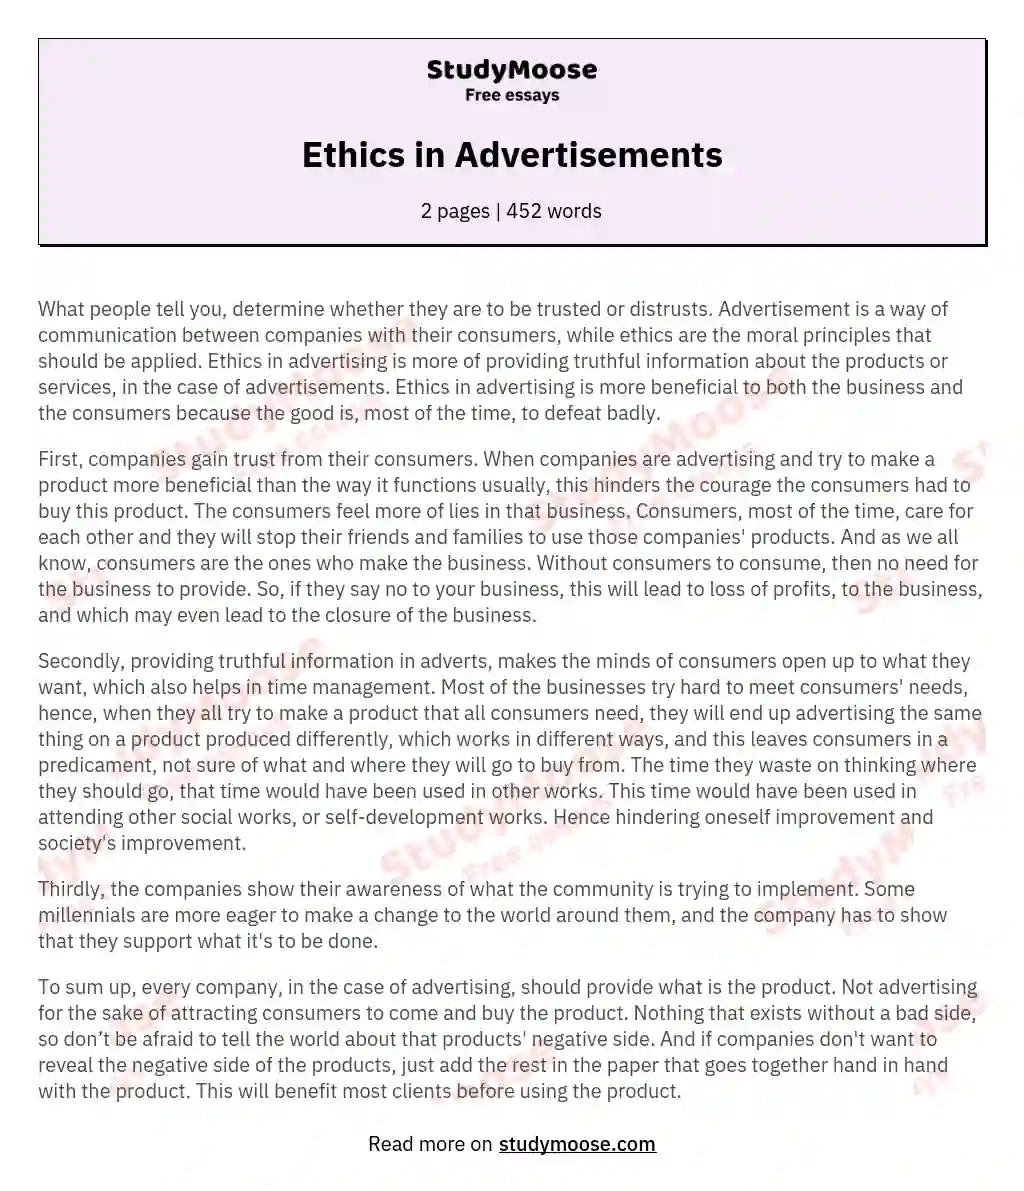 Ethics in Advertisements essay